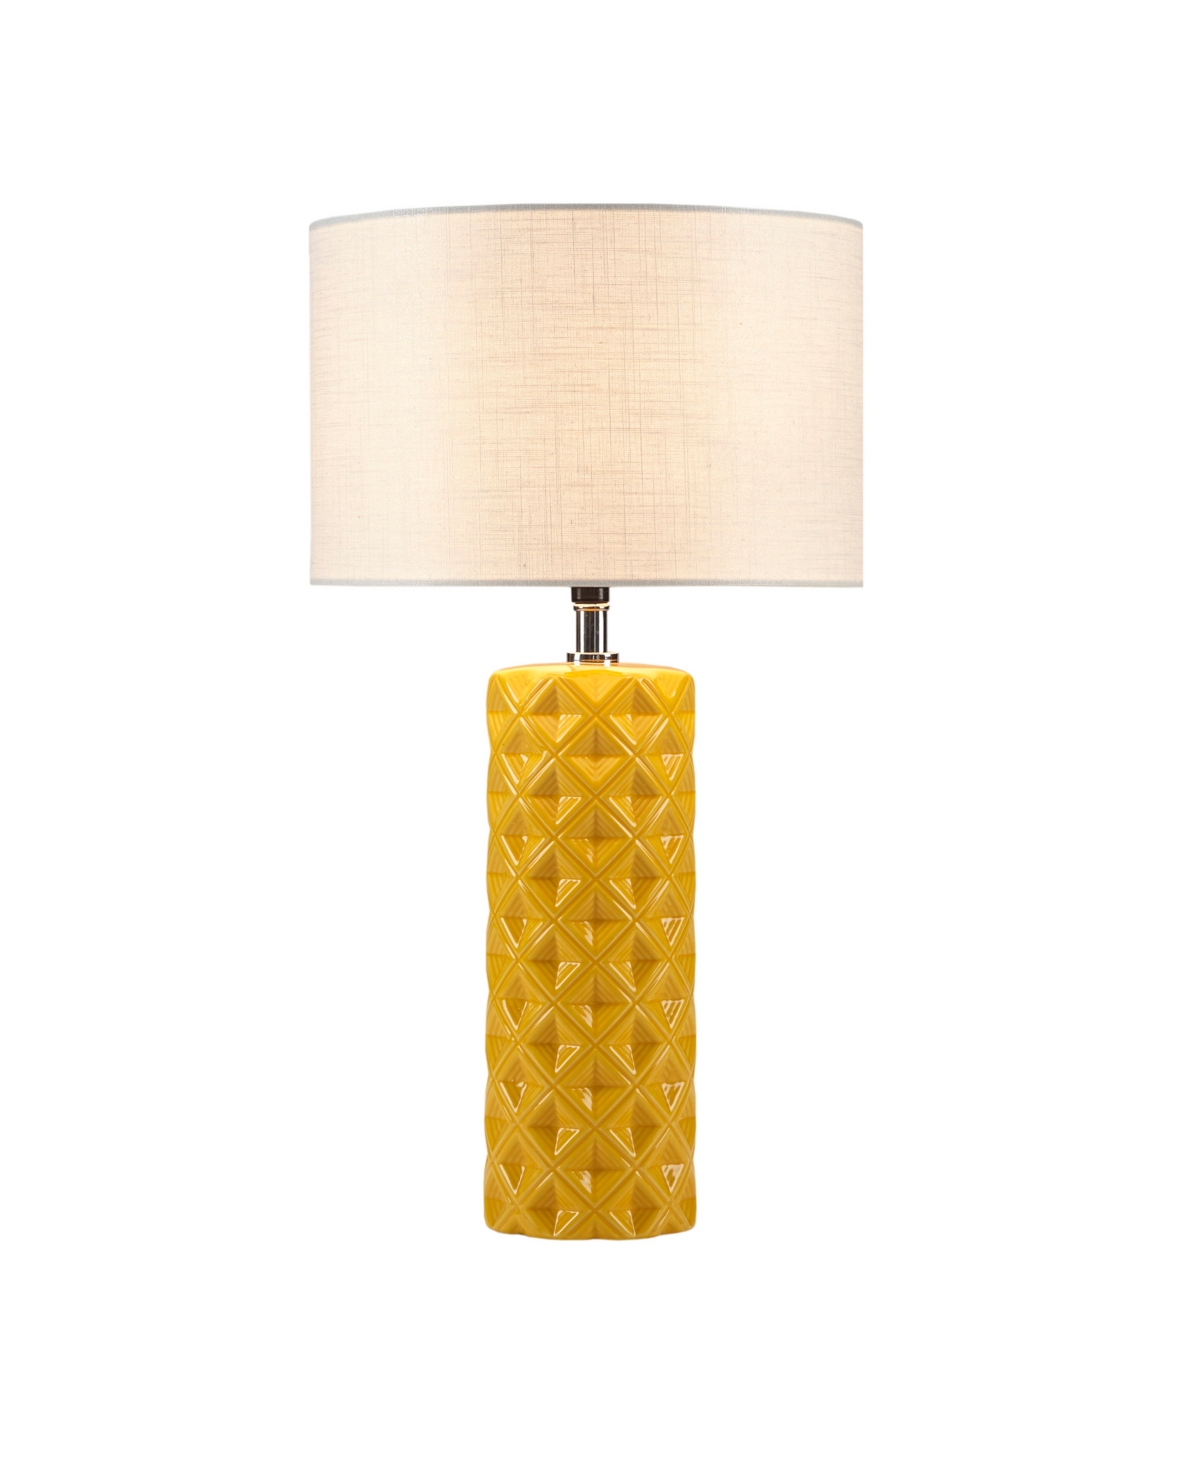 510 Design Macey Table Lamp In Orange